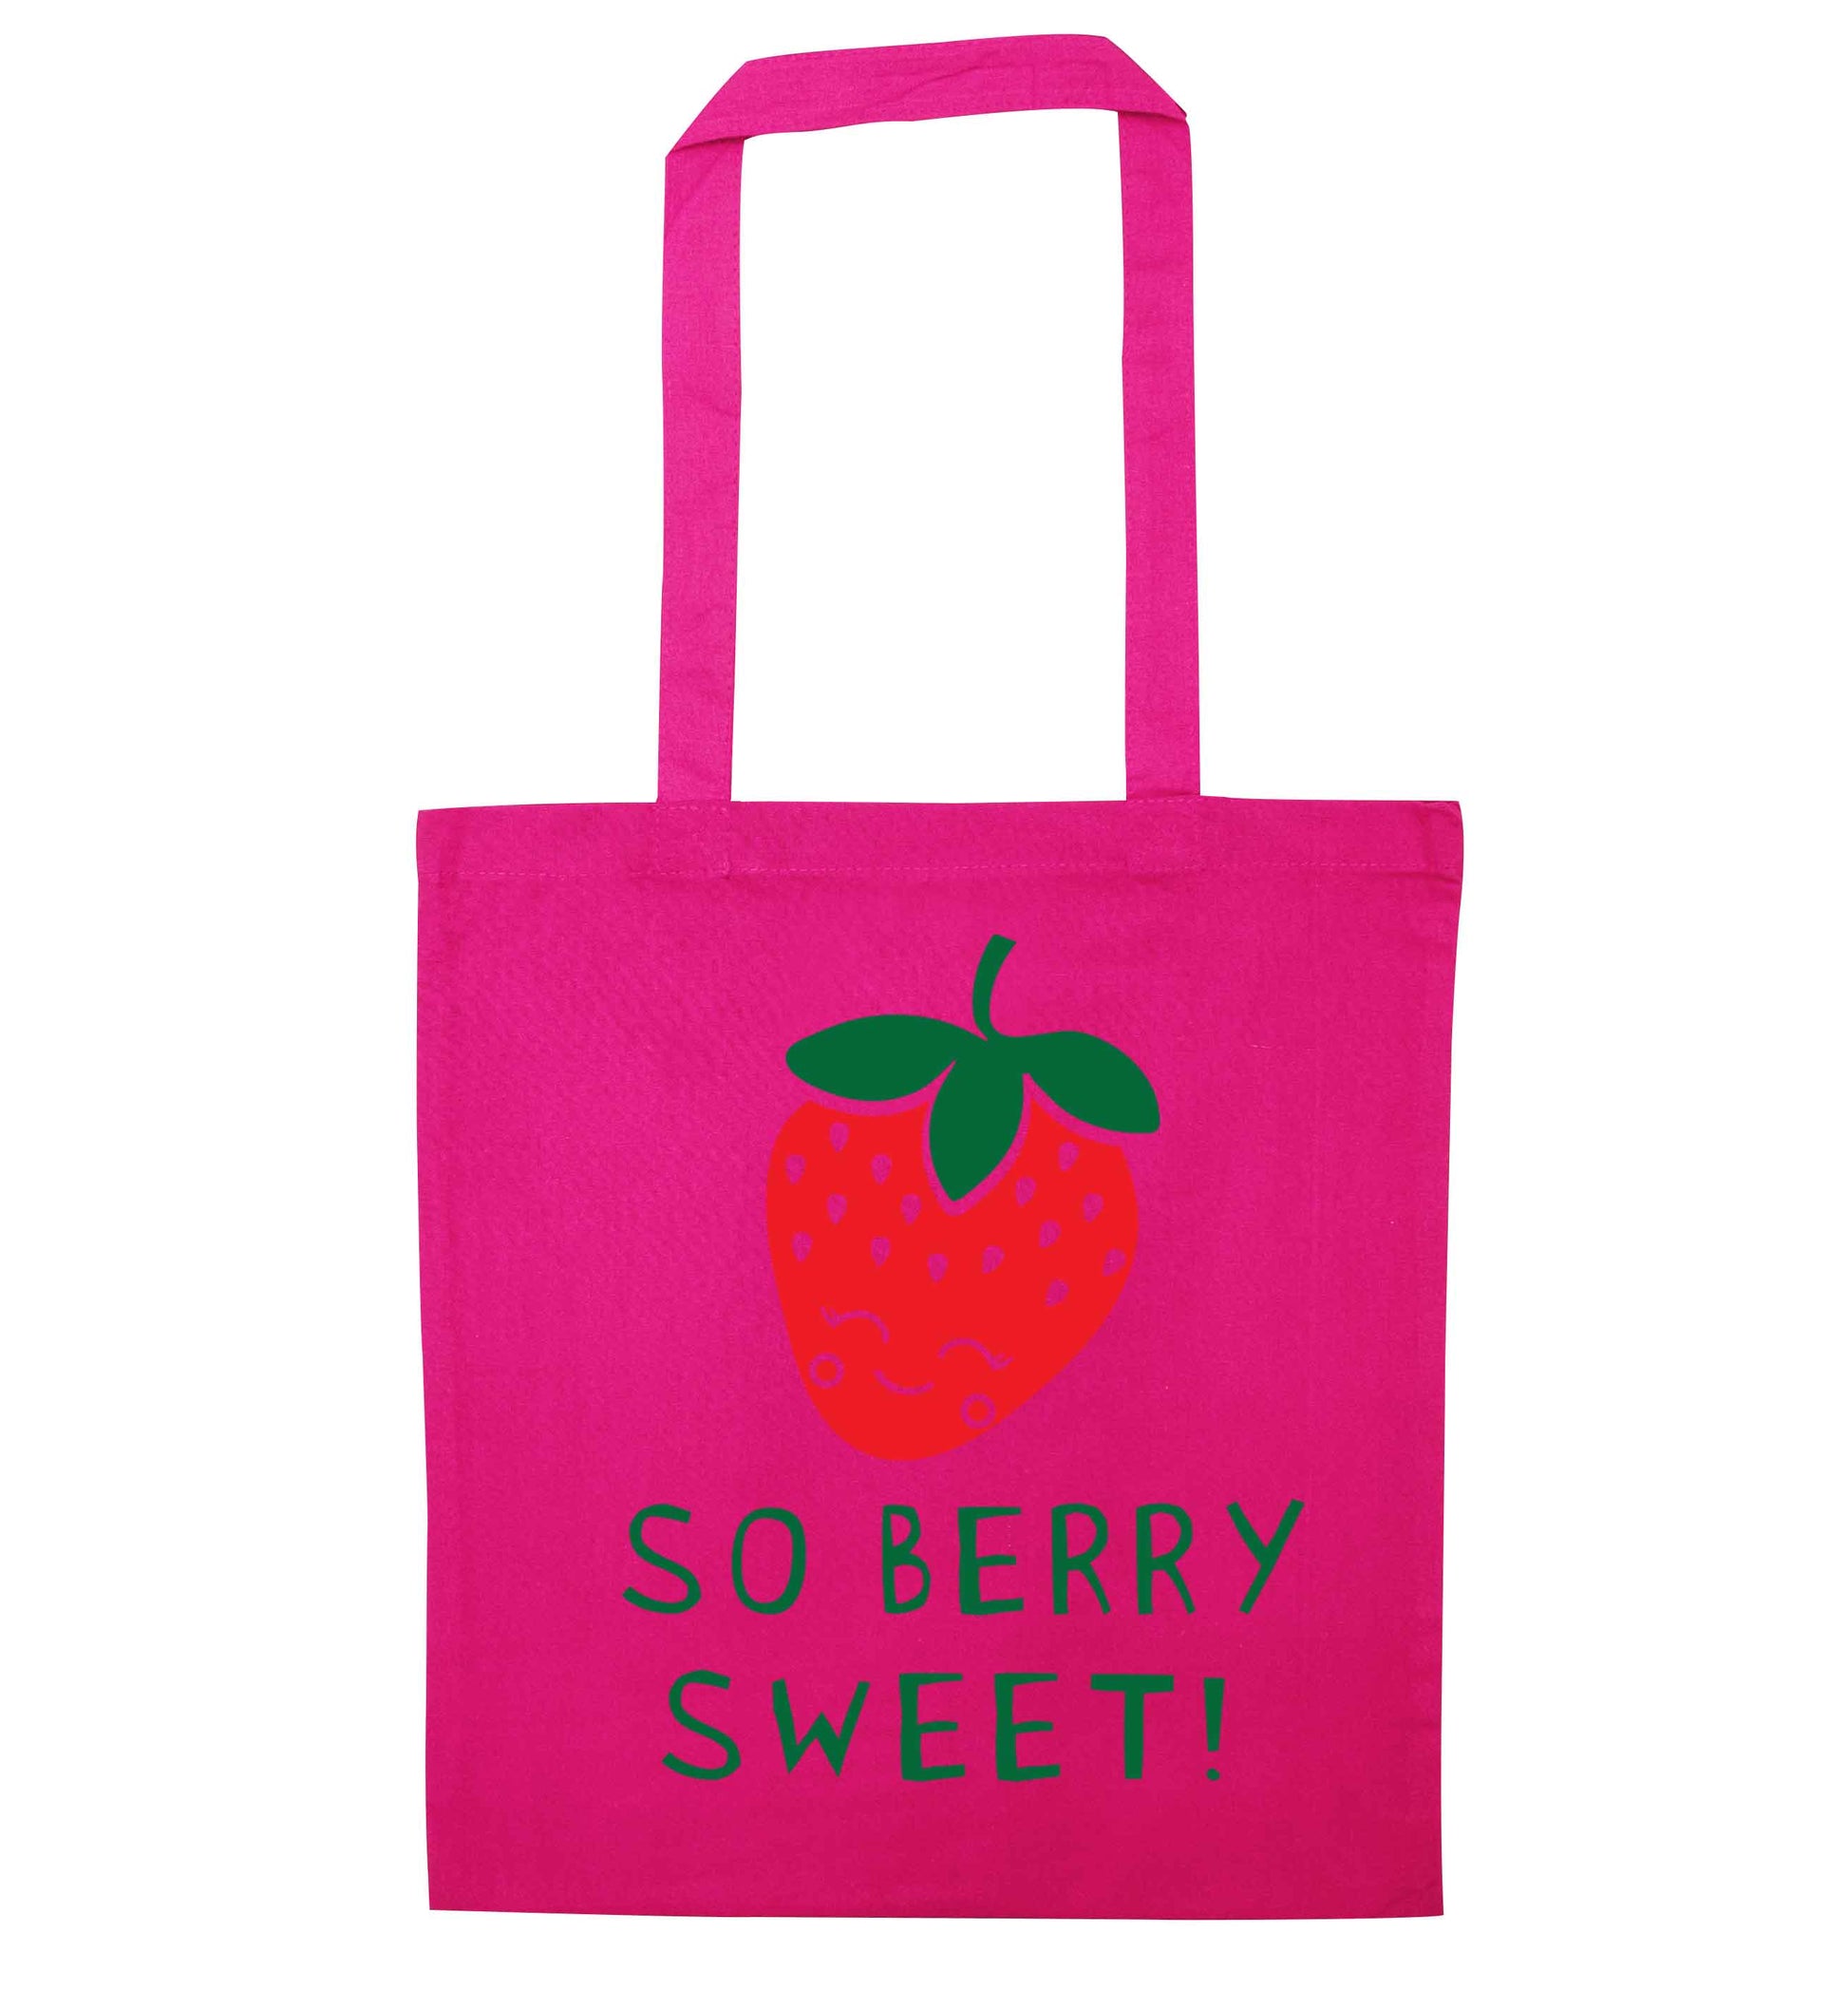 So berry sweet pink tote bag